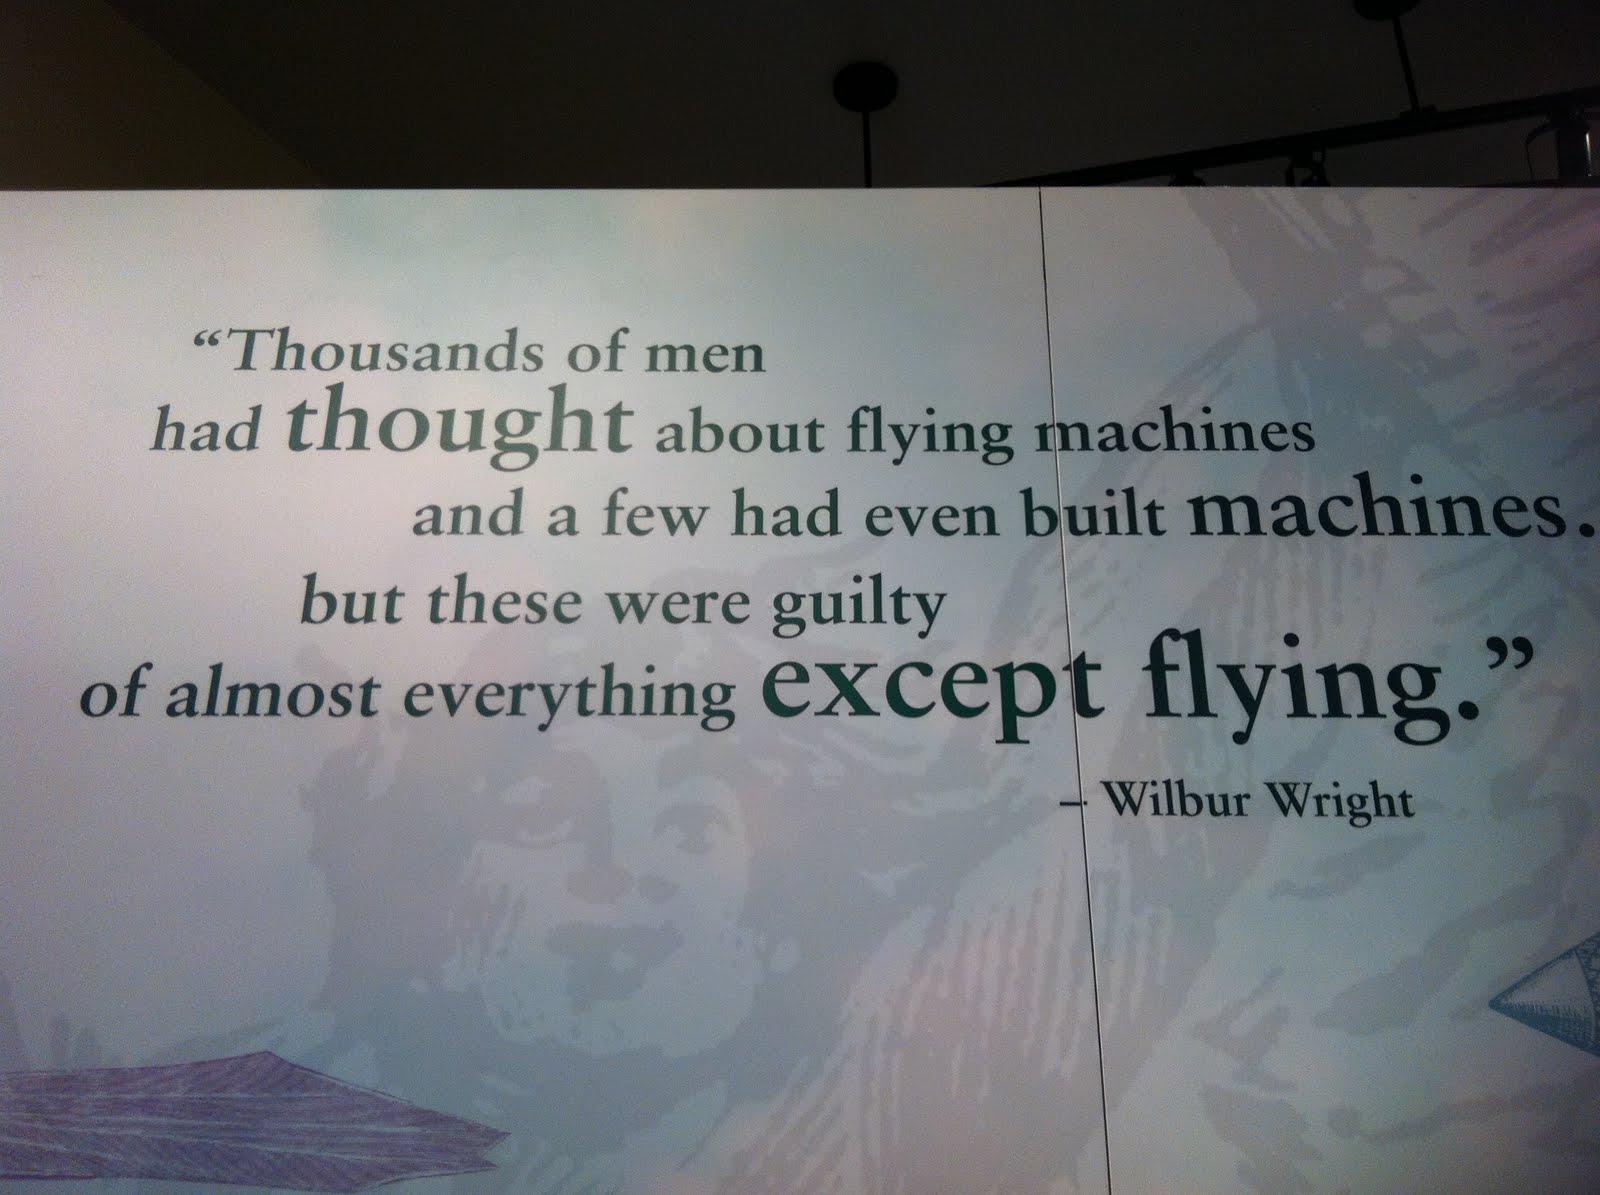 Wilbur Wright's quote